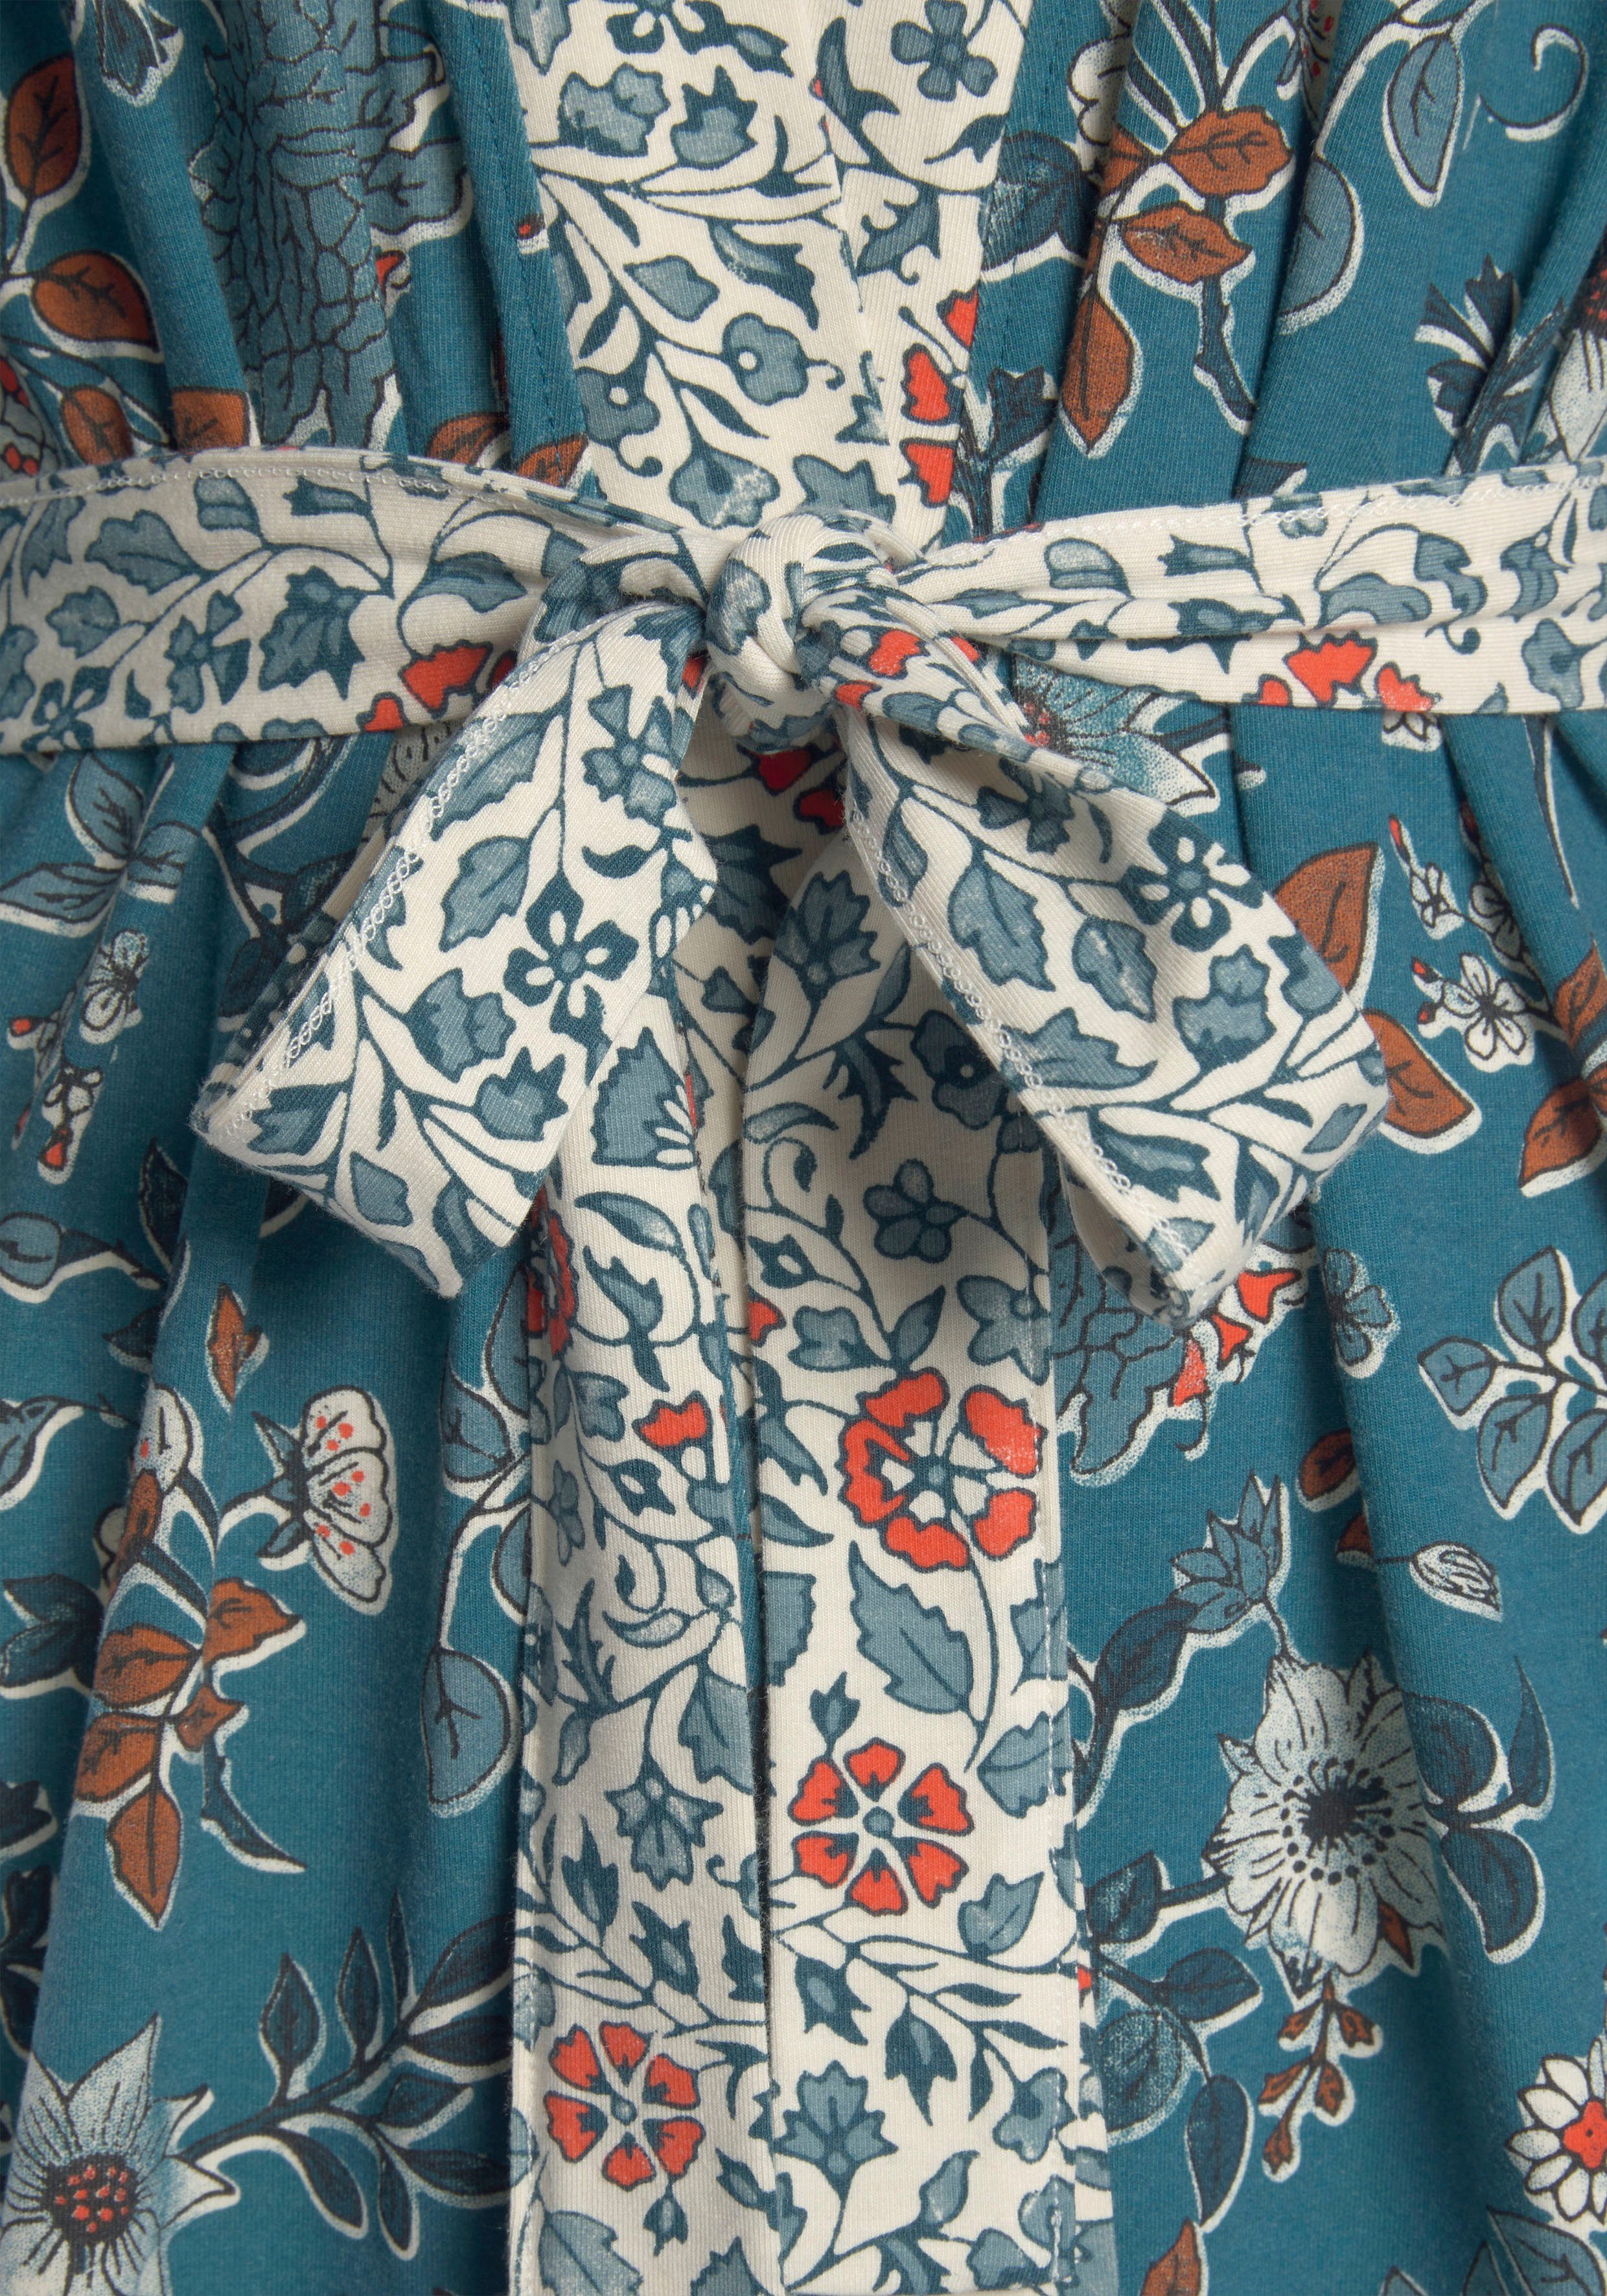 LASCANA Kimono, Allover-Druck Gürtel, Blumen rauchblau-ecru Kurzform, mit Kimono-Kragen, Jersey